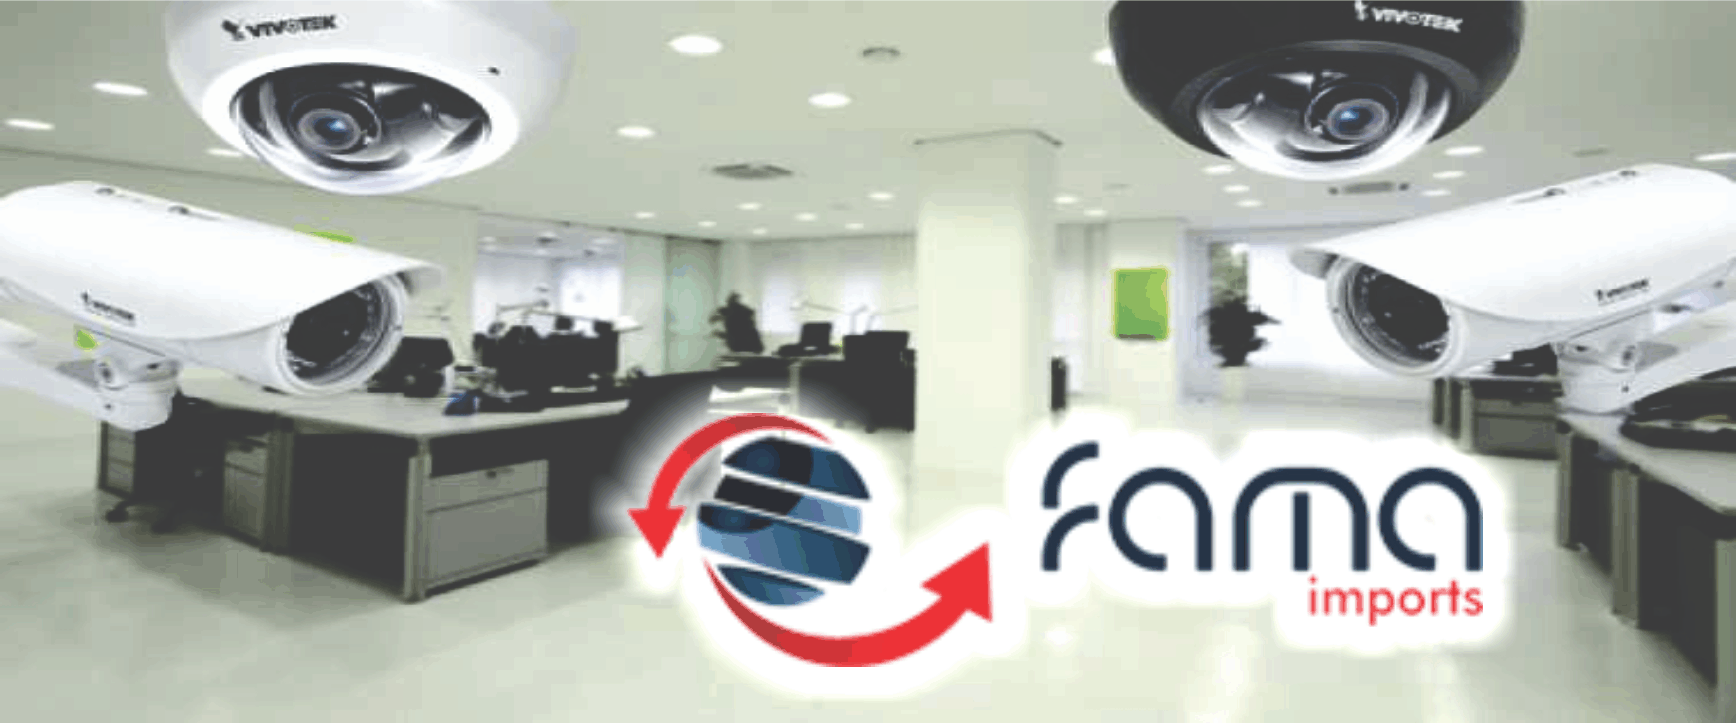 Fama Imports      Fones: (41) 98449-1544 